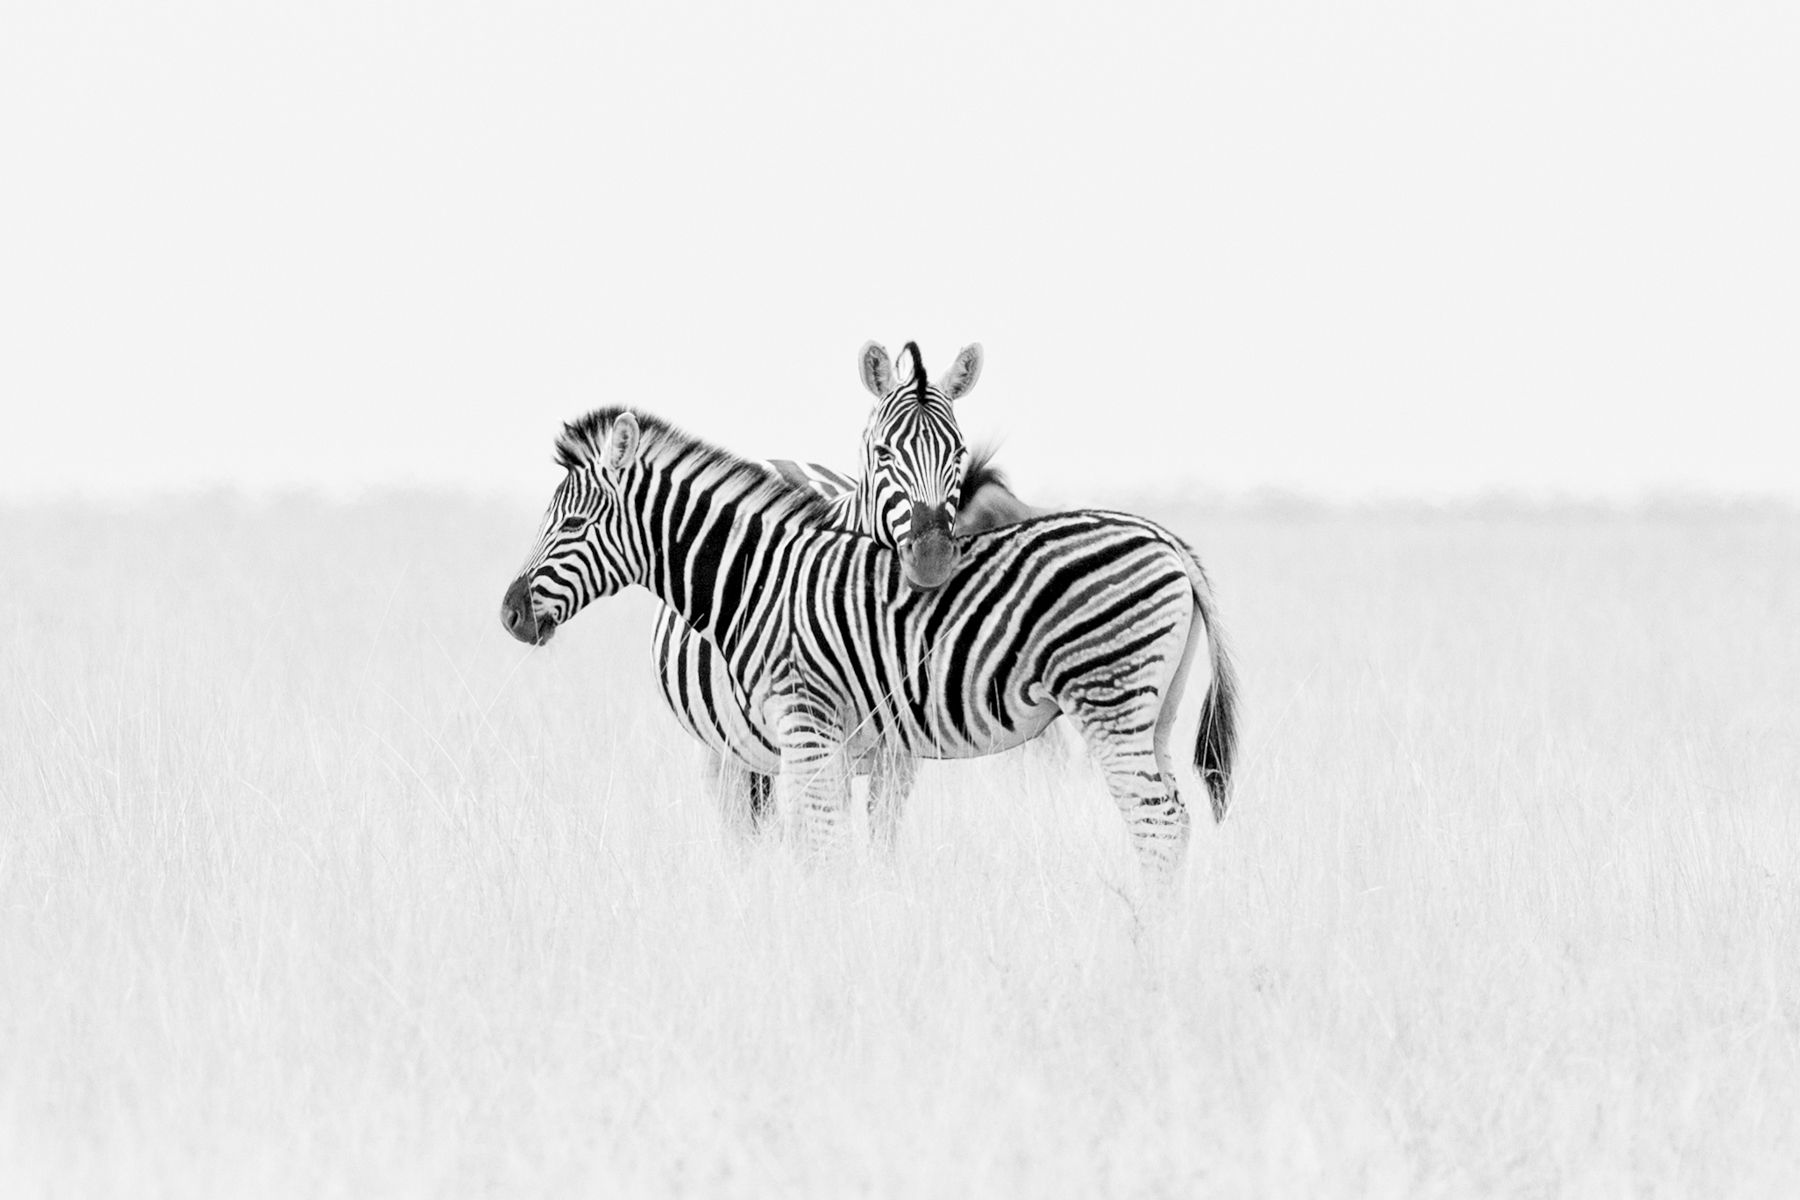 A pair of Burchell's Zebras rest on the grasslands of Etosha